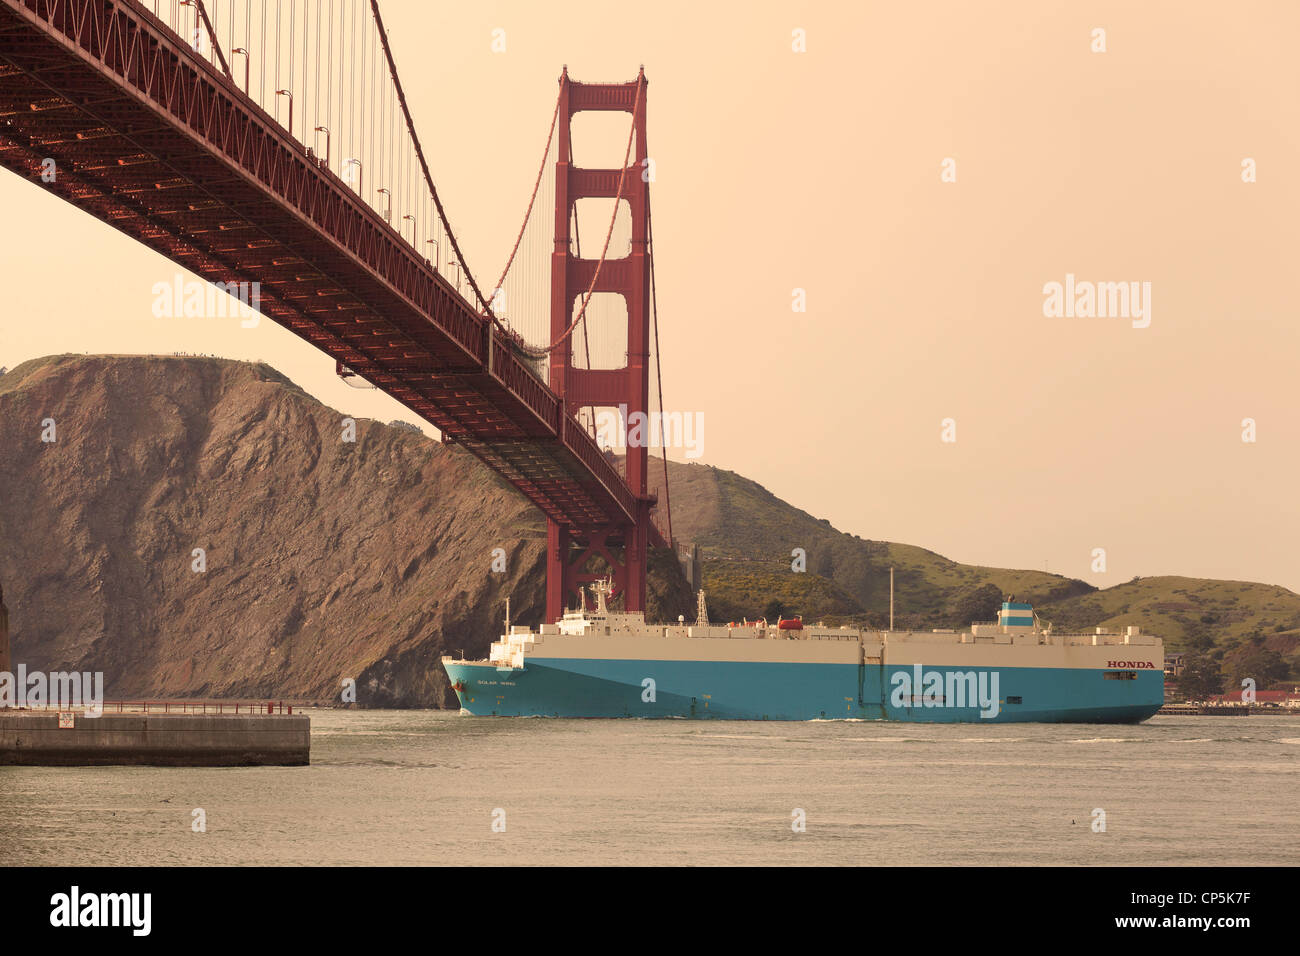 A Honda ship leaving the San Francisco bay Stock Photo